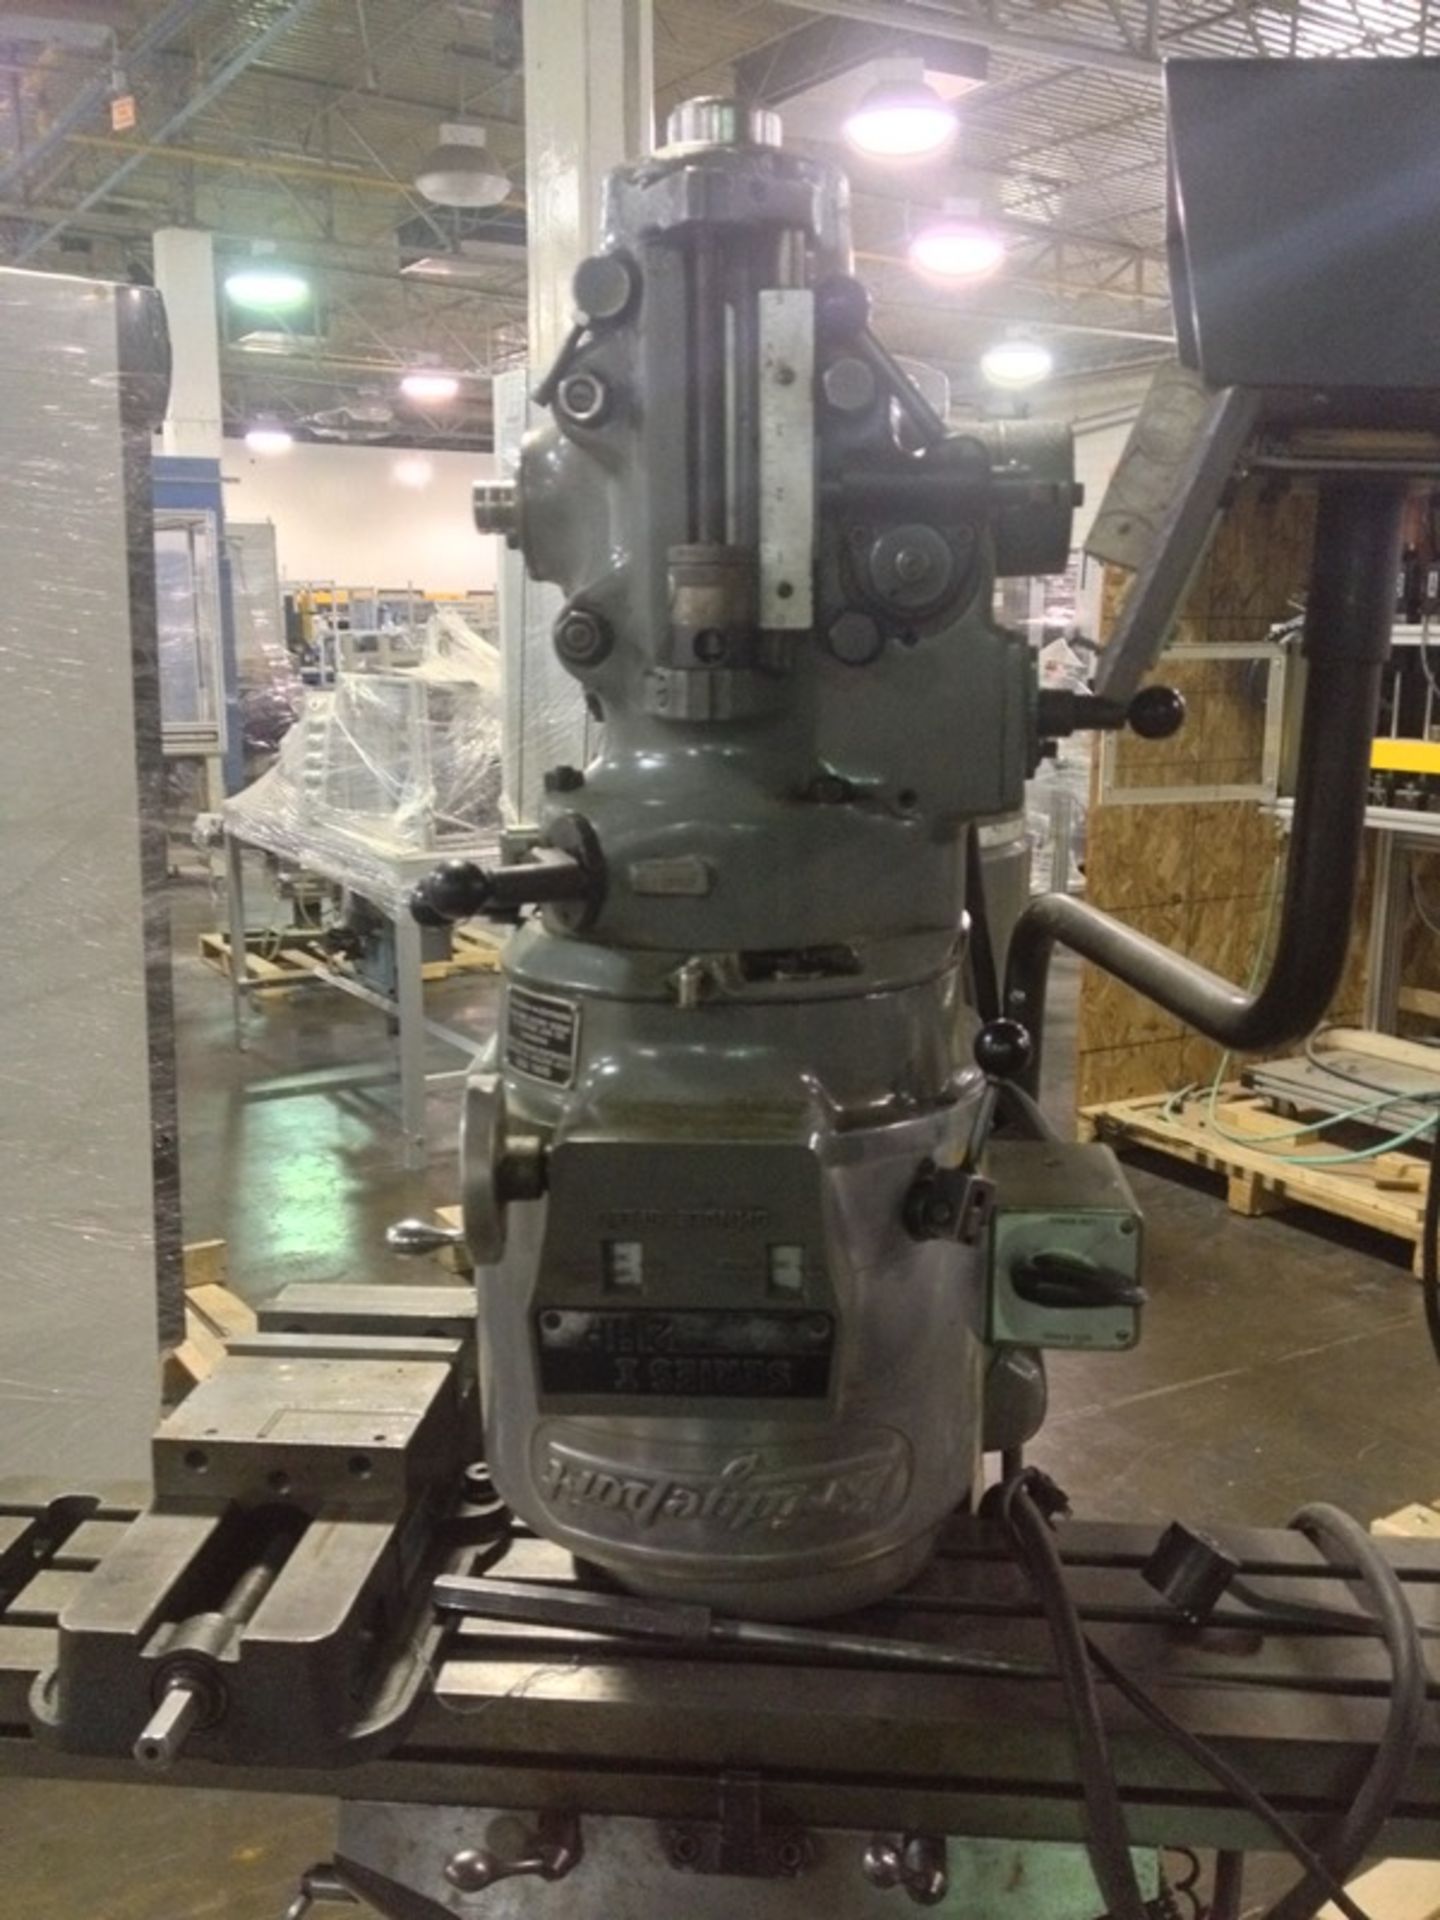 2HP Milling Machine, Brand: Bridgeport, Series: 2J 123204-2. Condition: Good, Location: Cd. Juarez - Image 12 of 20